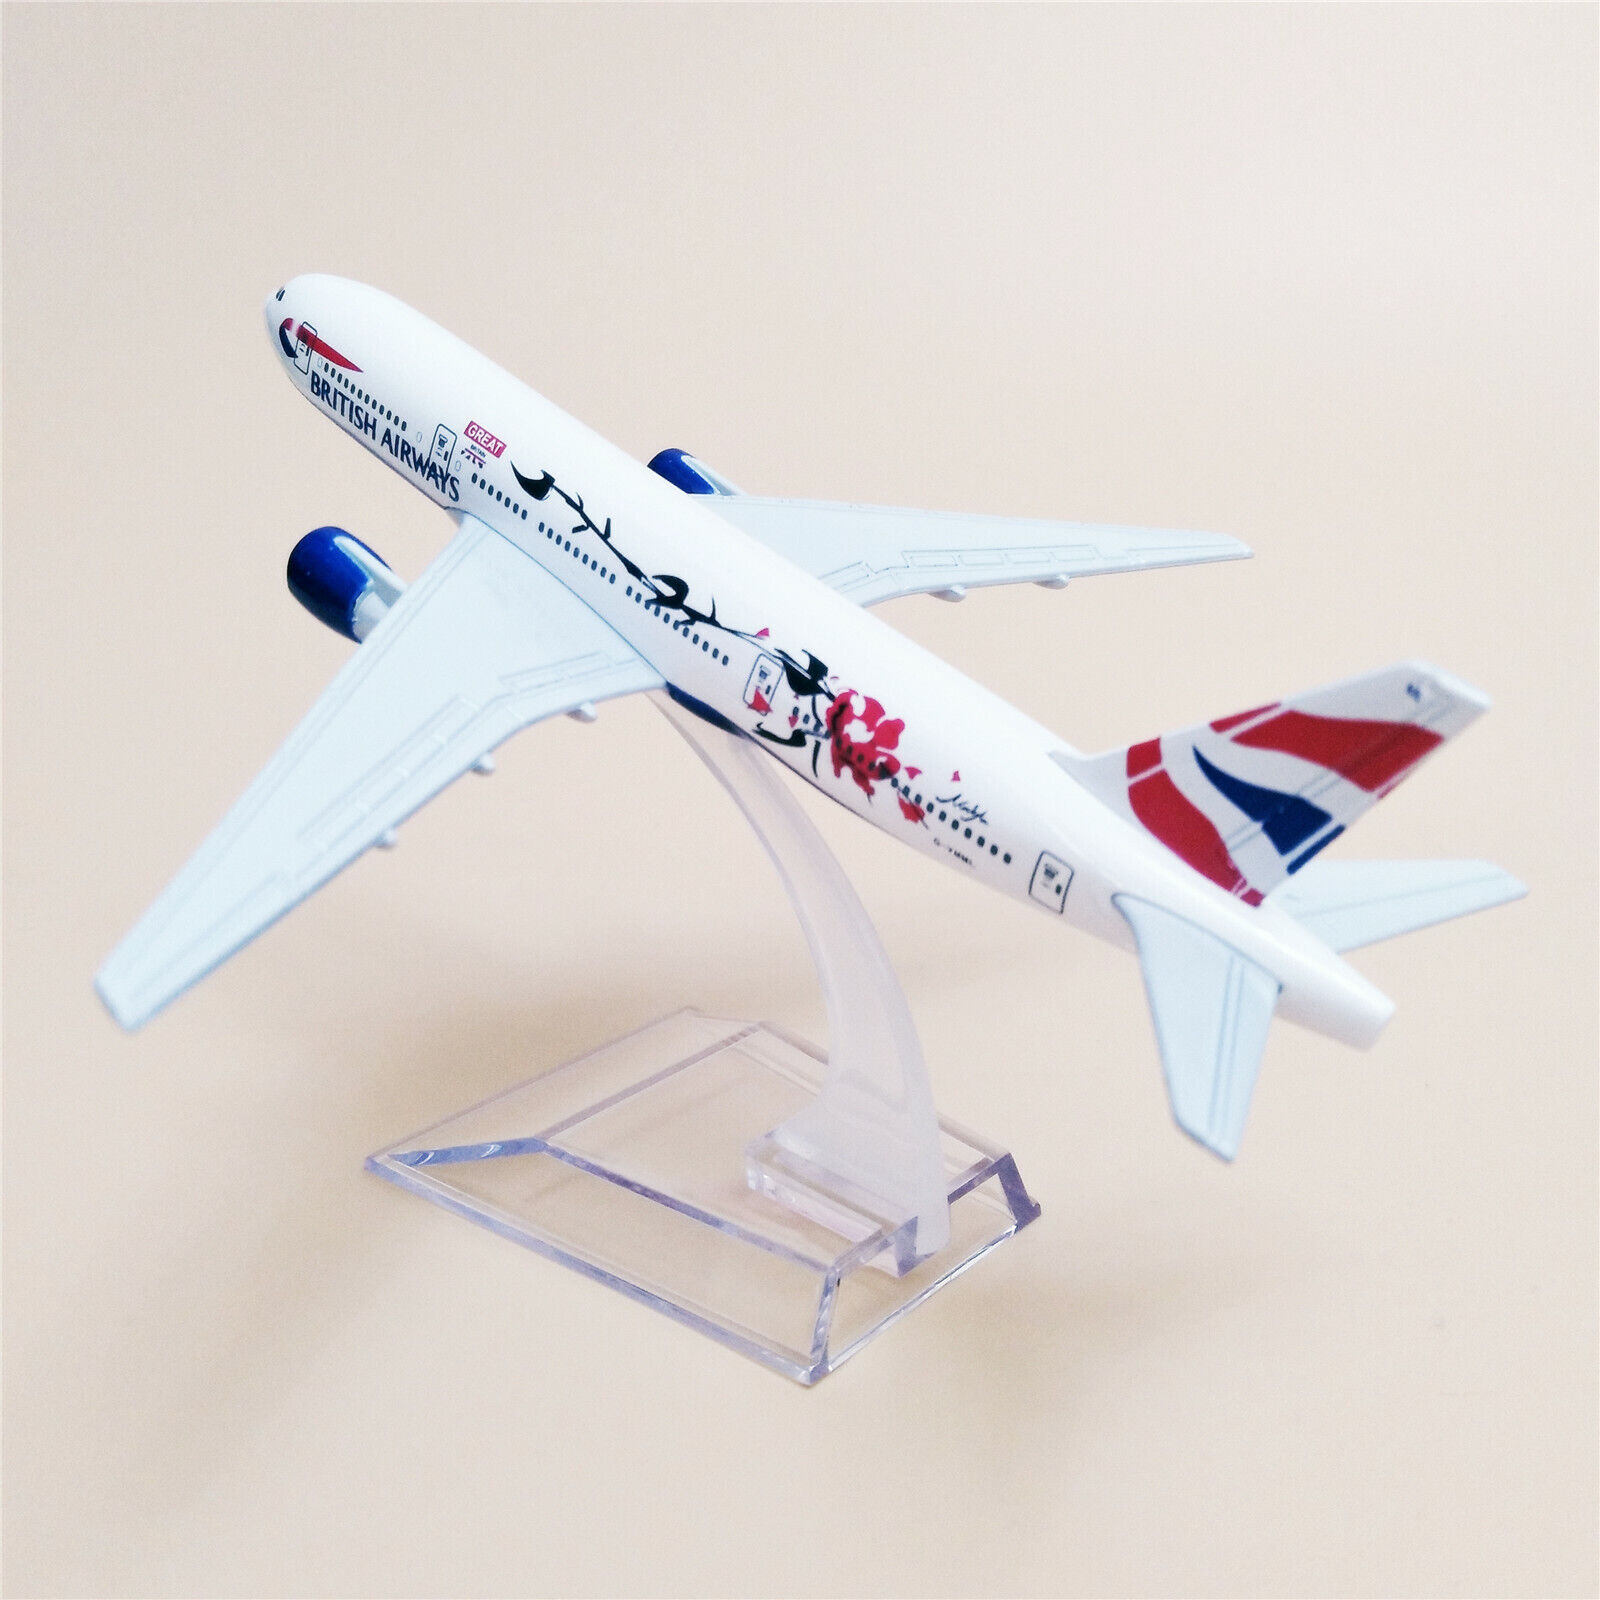 British Airways Boeing B777 Airlines Metal Airplane Model Plane Aircraft 16cm